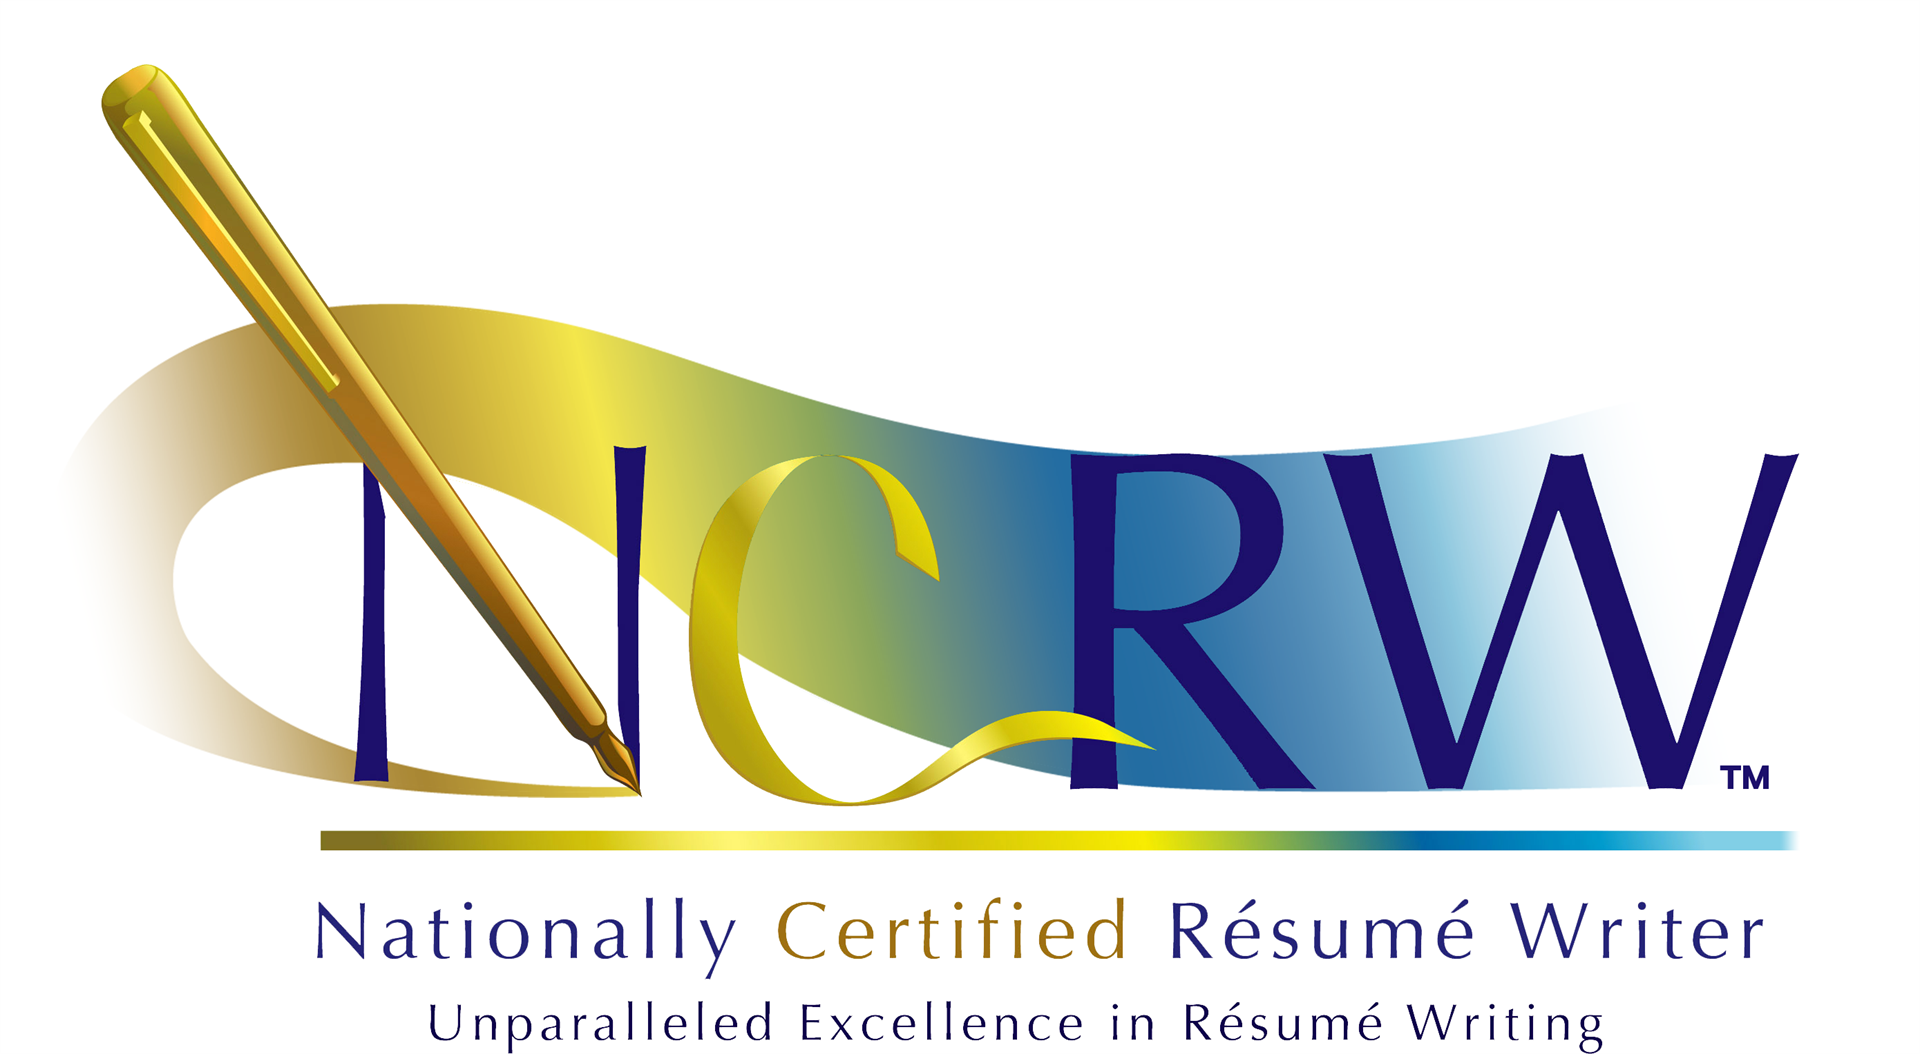 resume writers certification